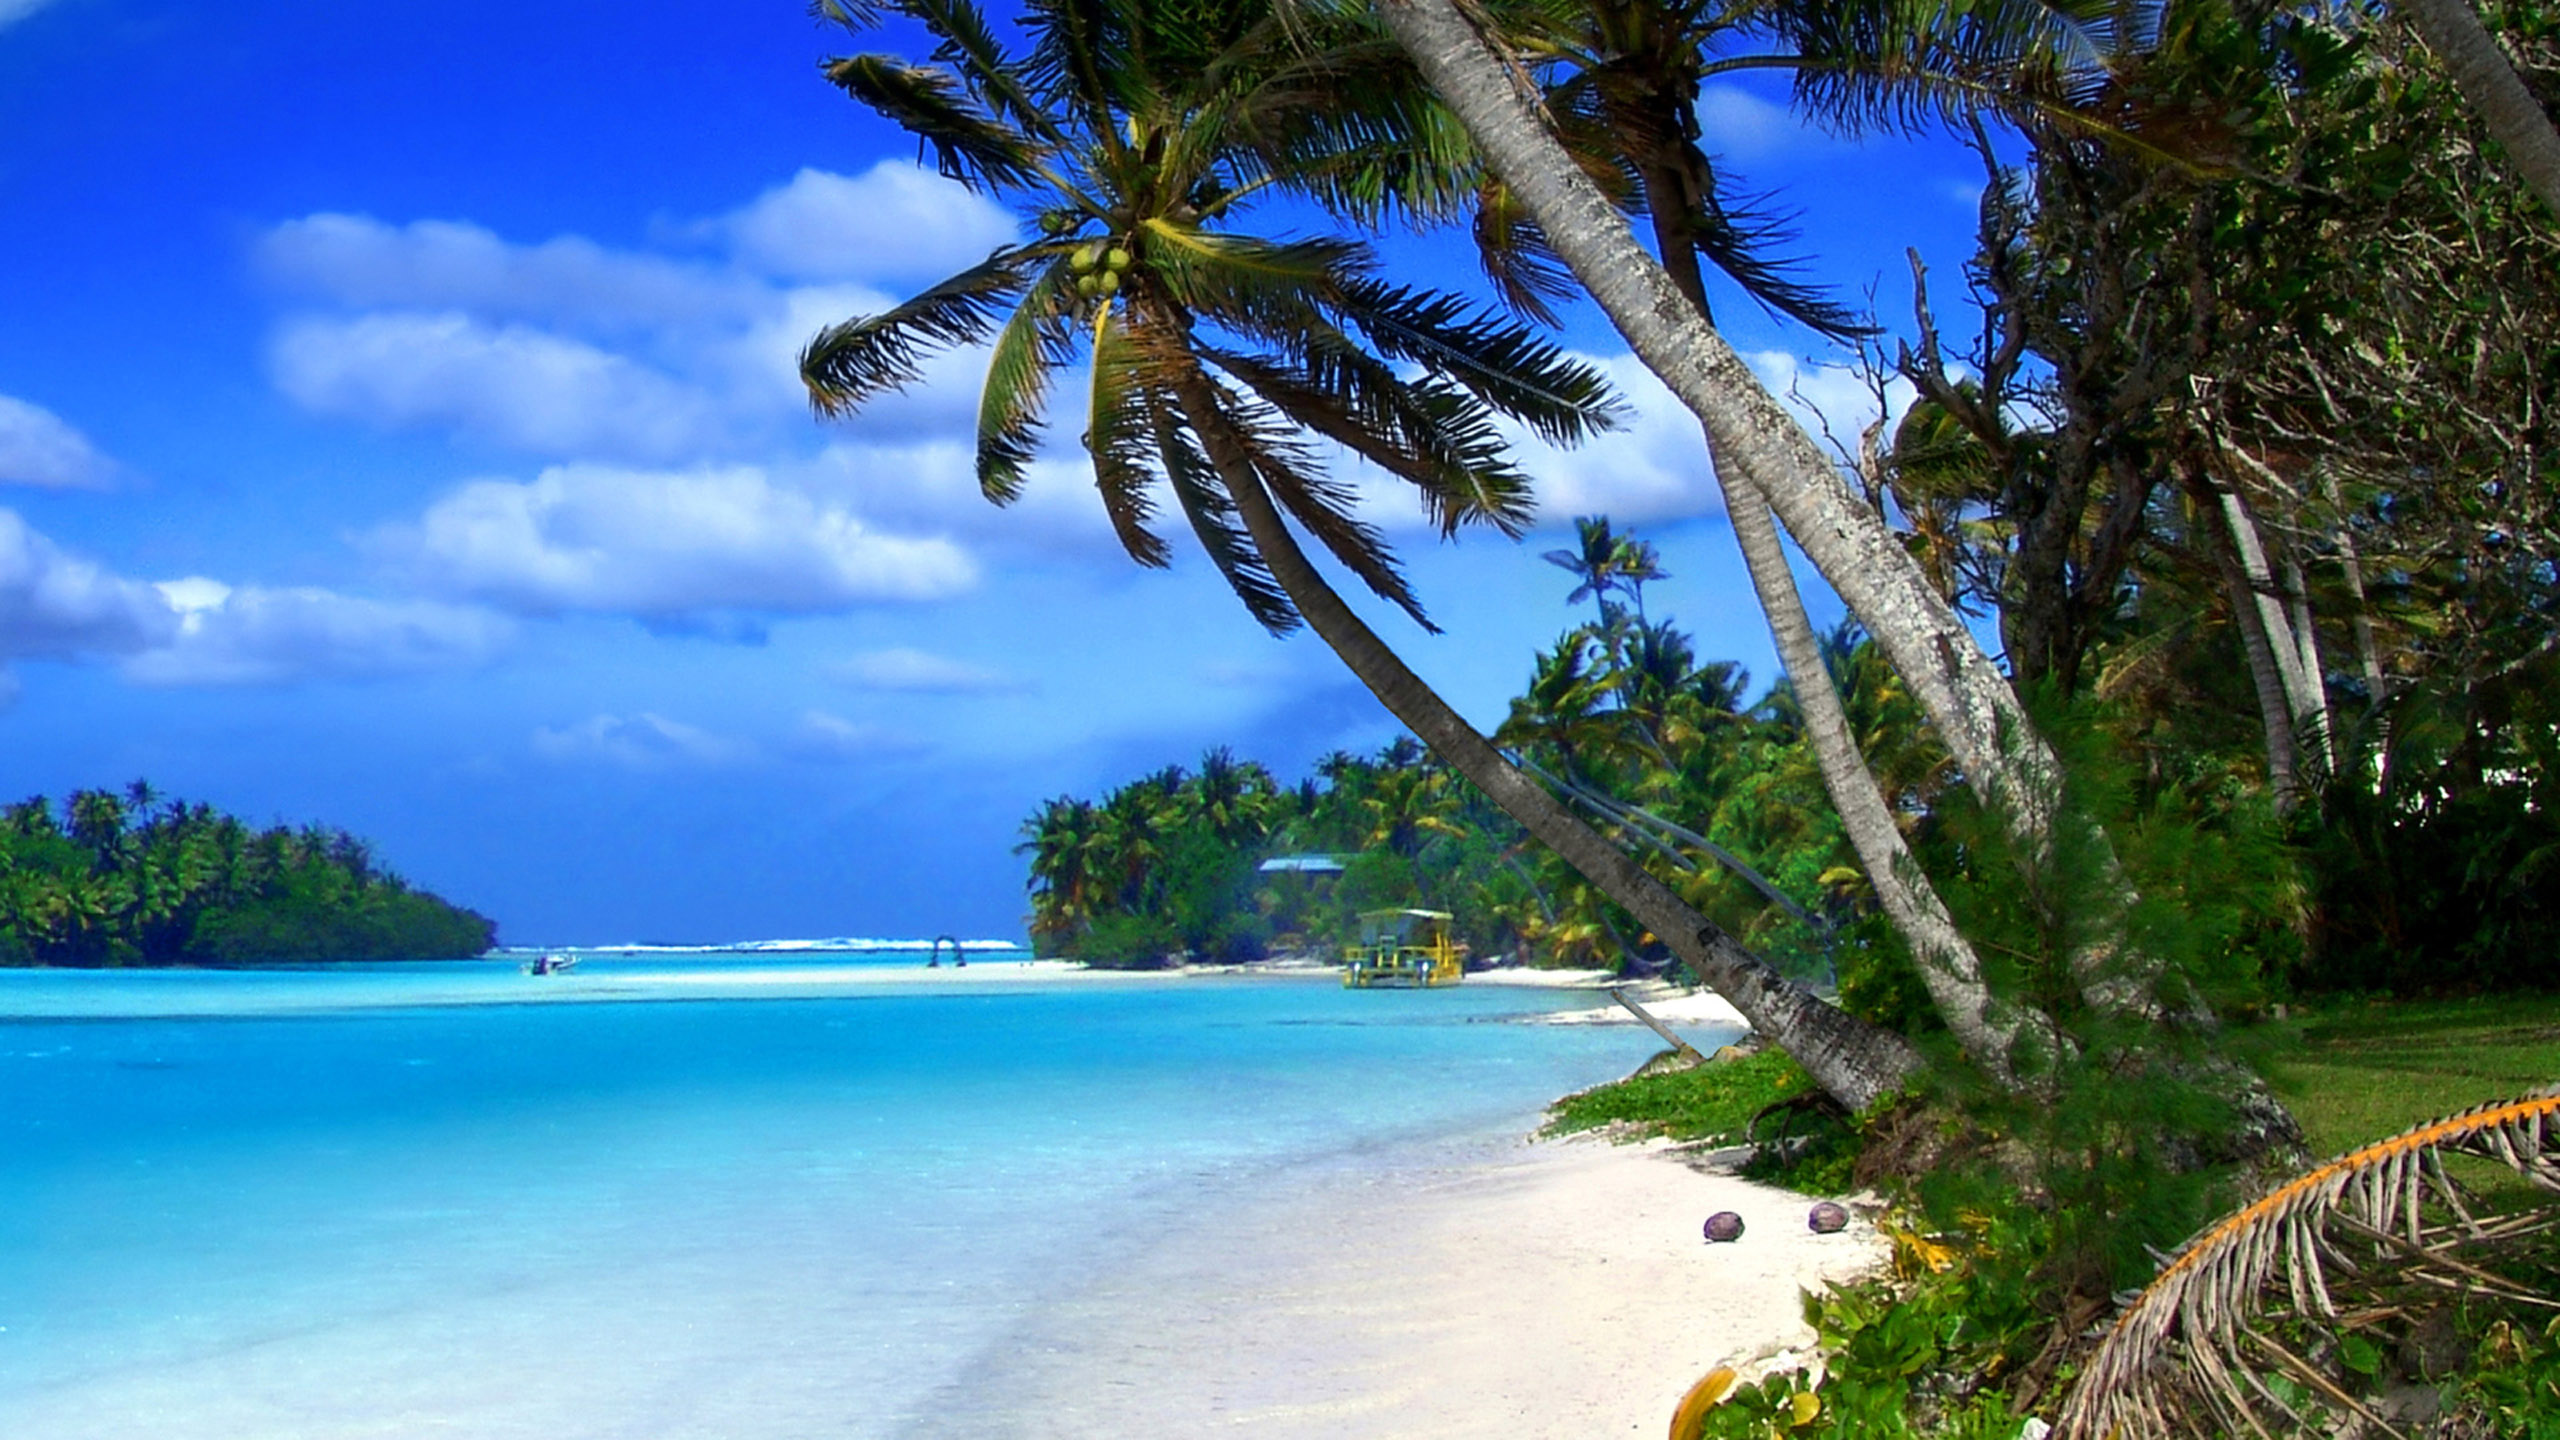 Beach Cayman Islands Tropical Landscape  Ocean Blue Water And Green